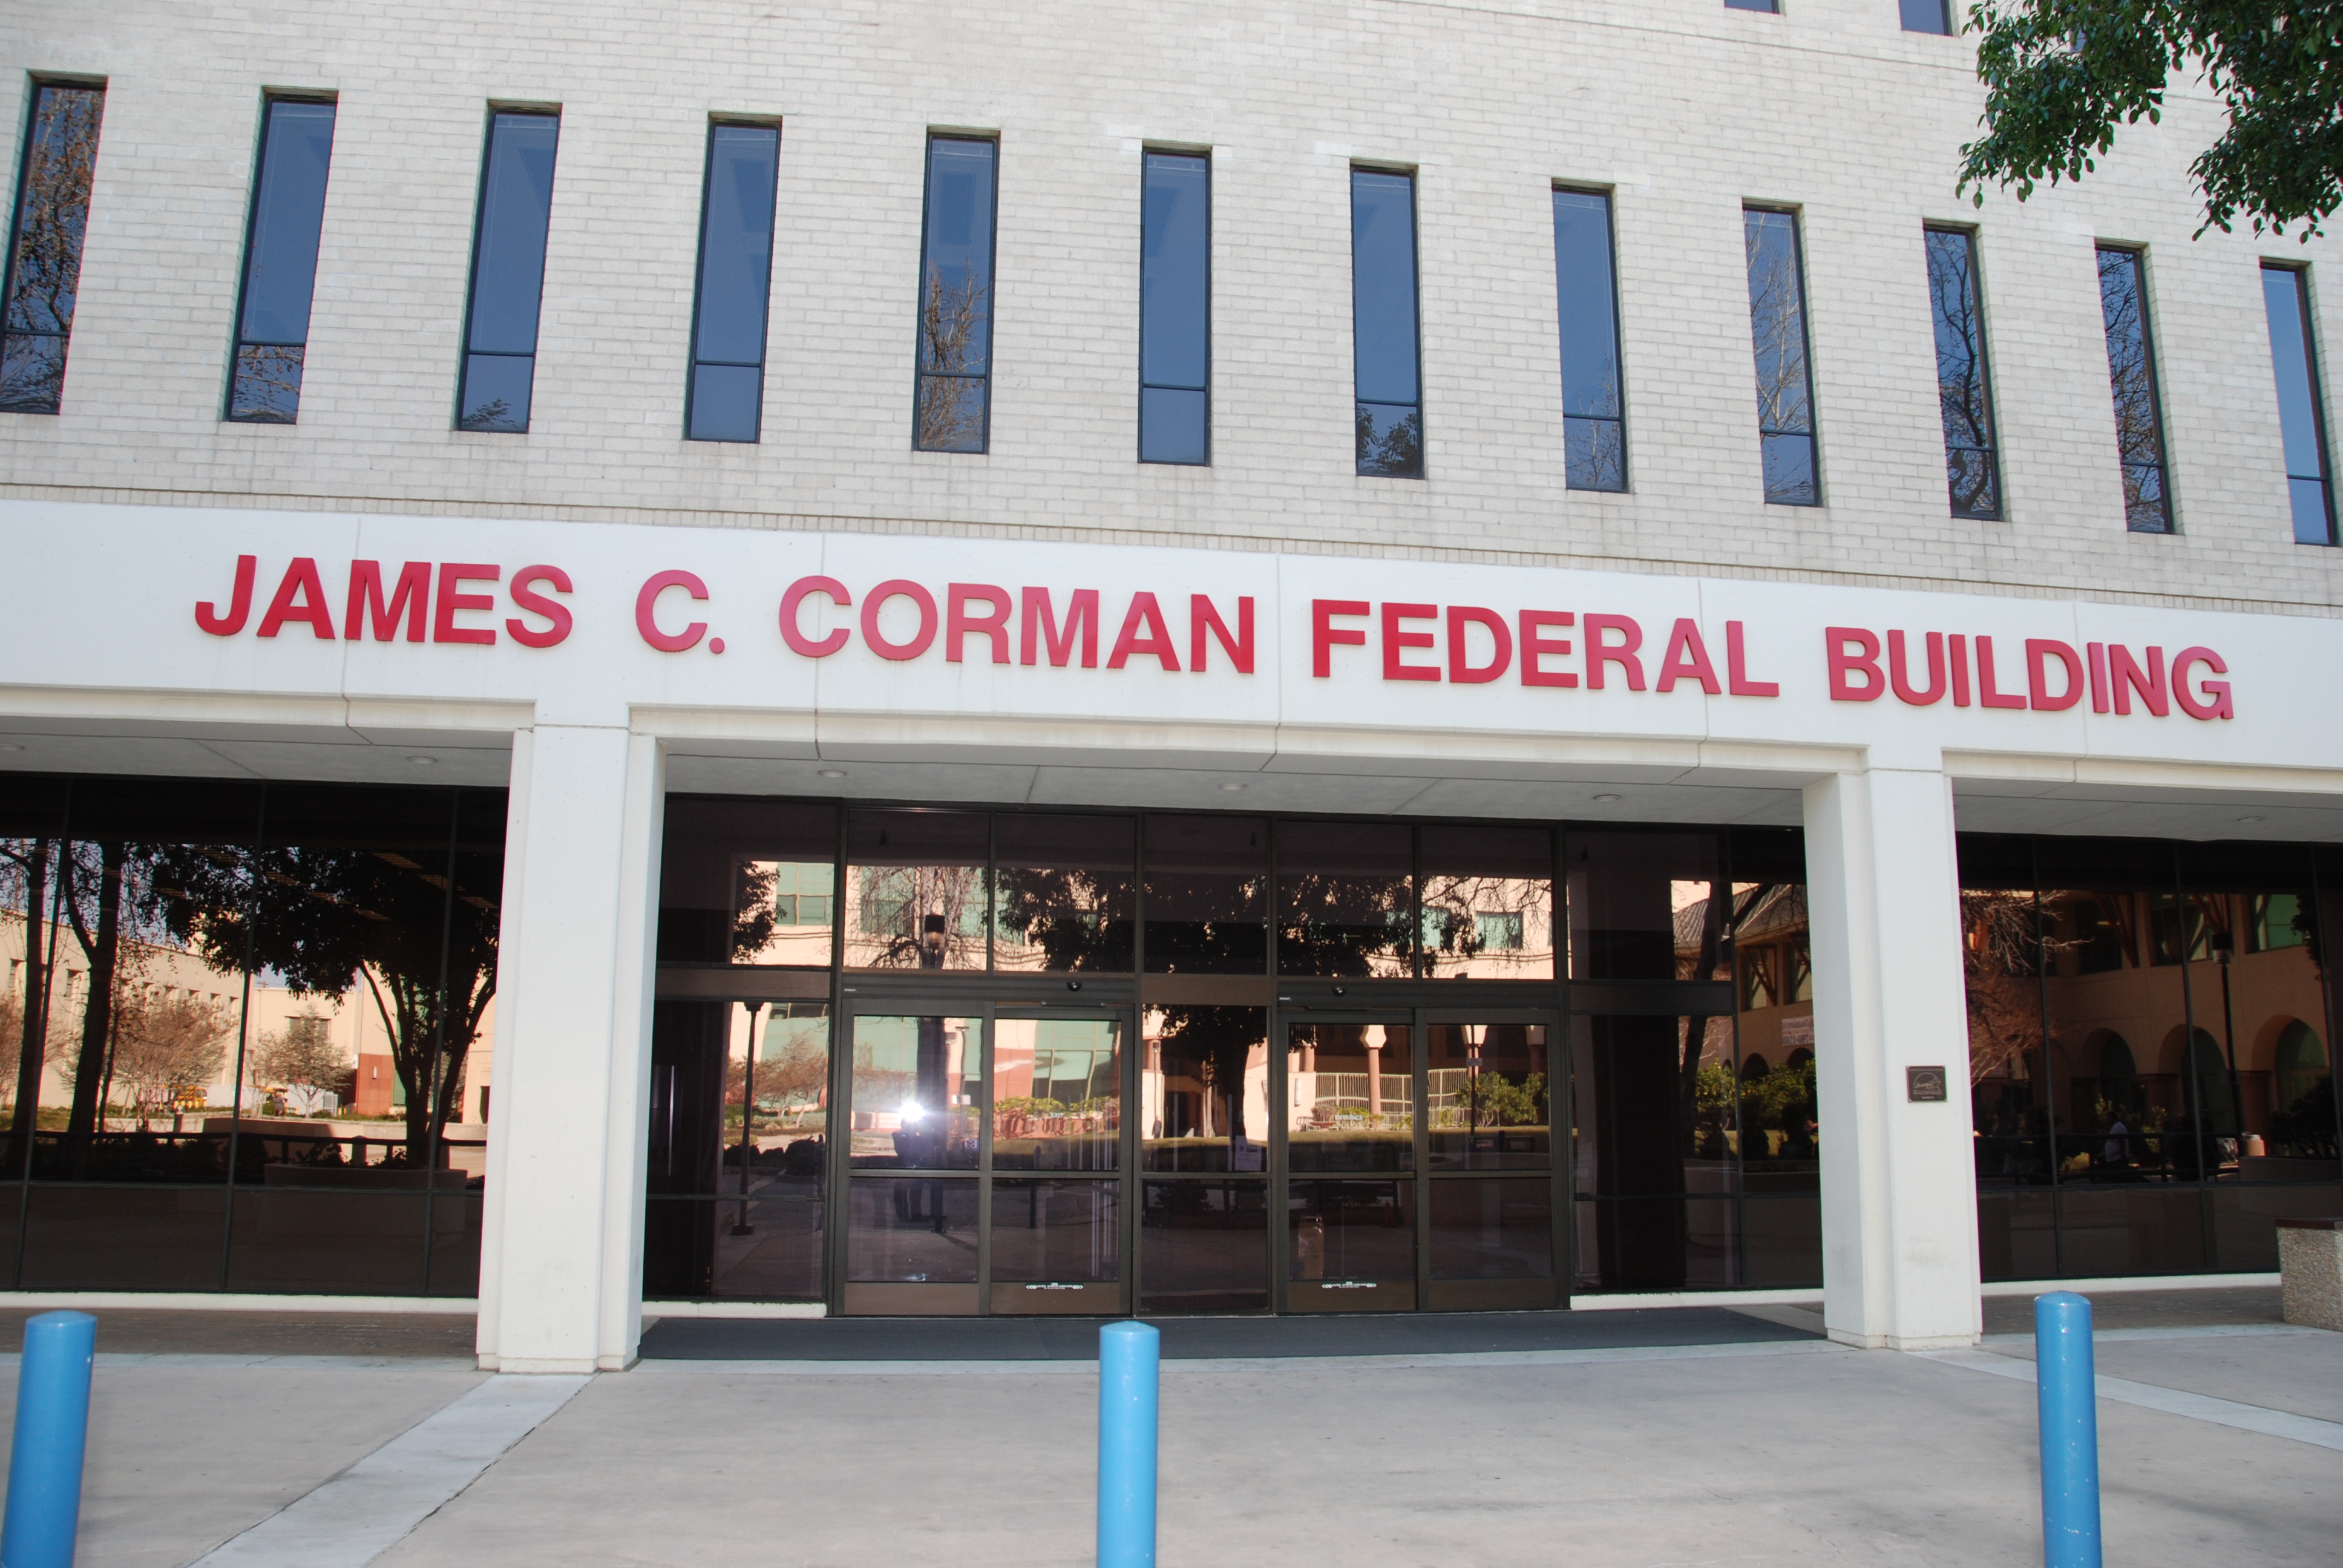 James C. Corman Federal Building